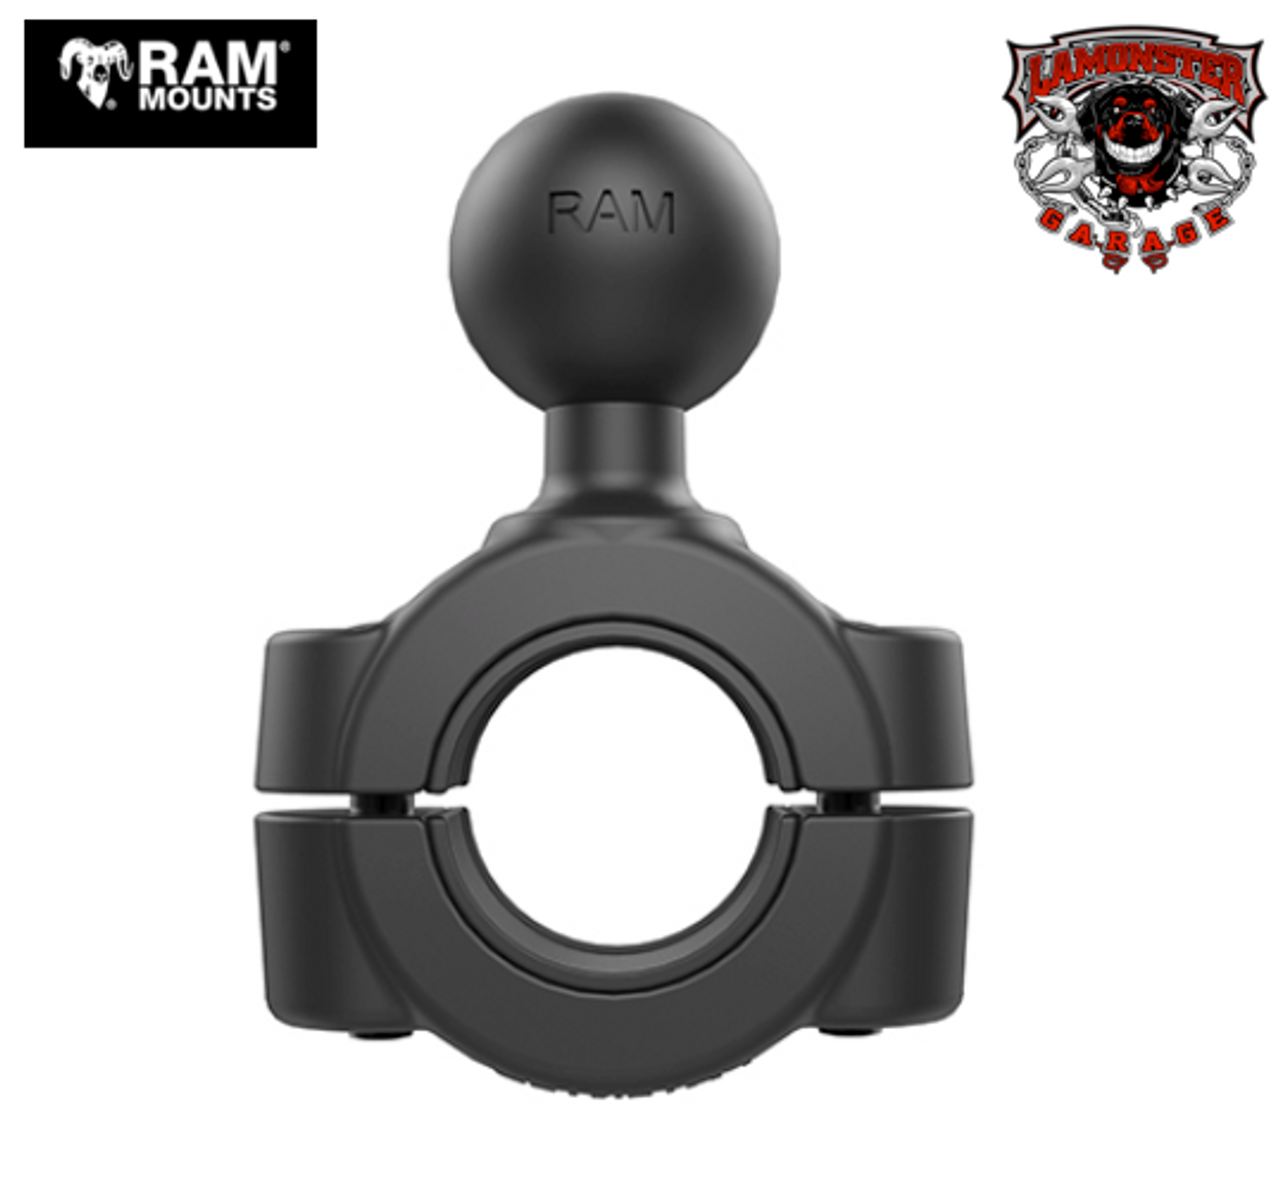 RAM® 3/4" - 1" Diameter Handlebar/Rail Base with 1" Ball (RAM-751U)
Fits Can Am Ryker Handlebars
Accommodates Handlebars 0.75" to 1" in diameter